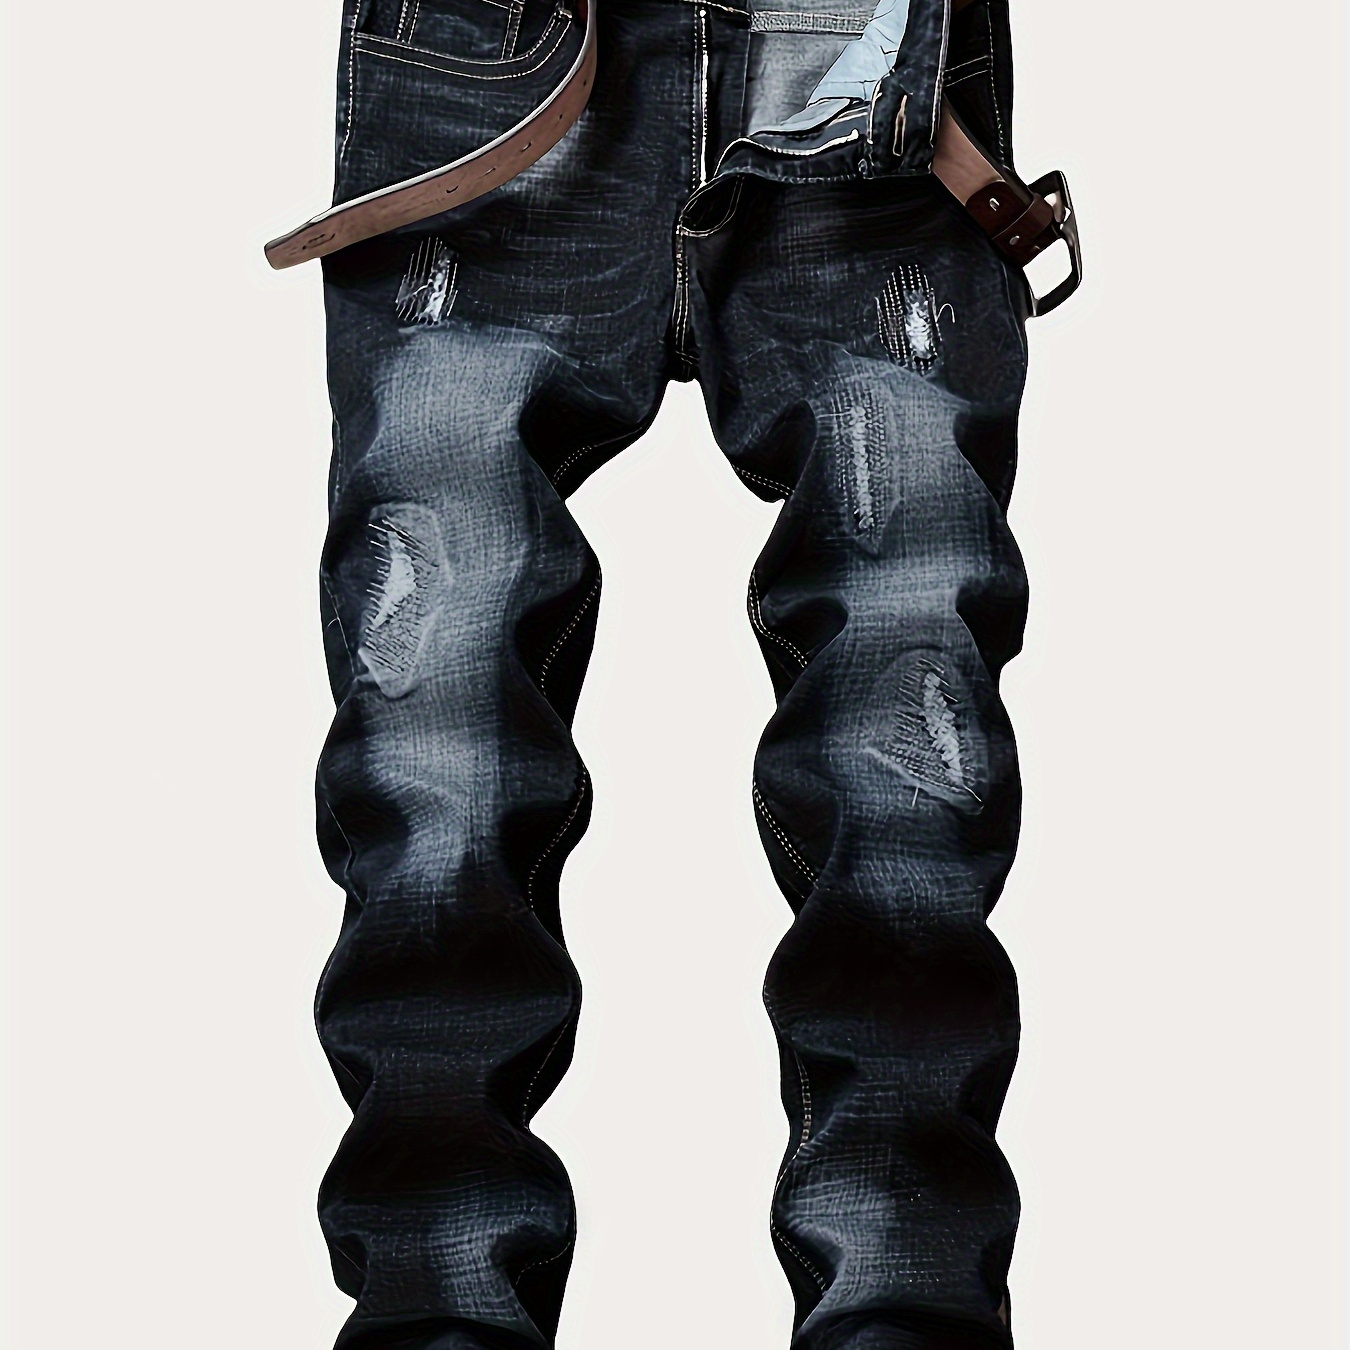 

Men's Trendy Ripped Jeans Distressed Punk Men's Denim Pants Slim Streetwear Hiphop Jeans